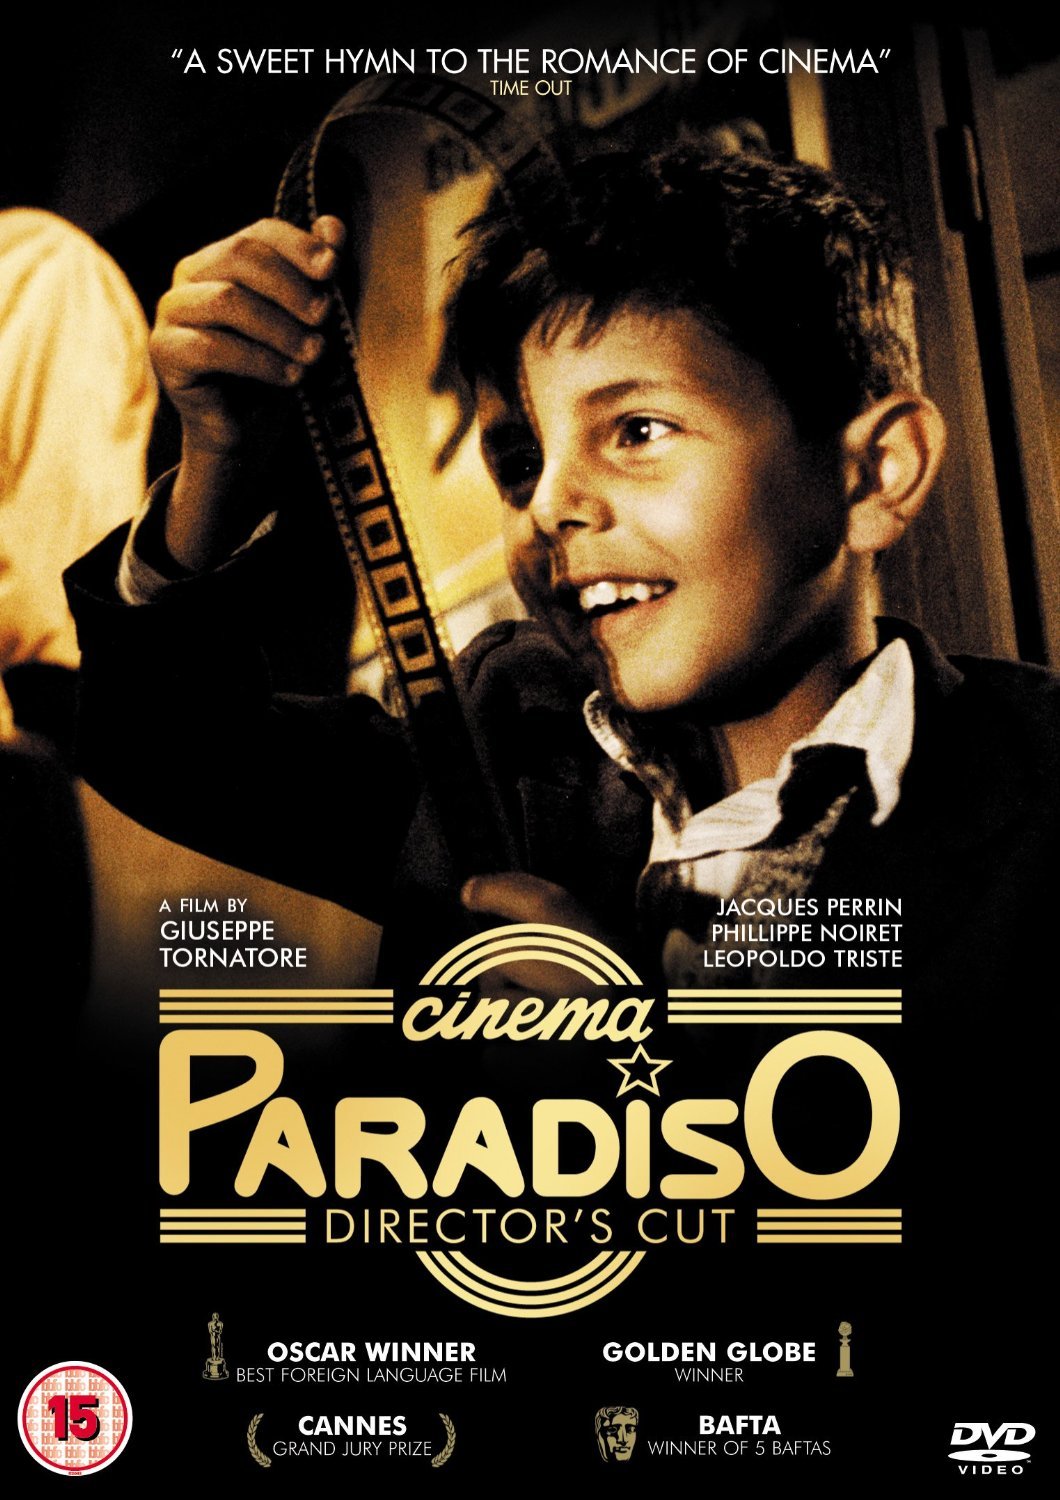 CINEMA PARADISO: Un homenaje al cine